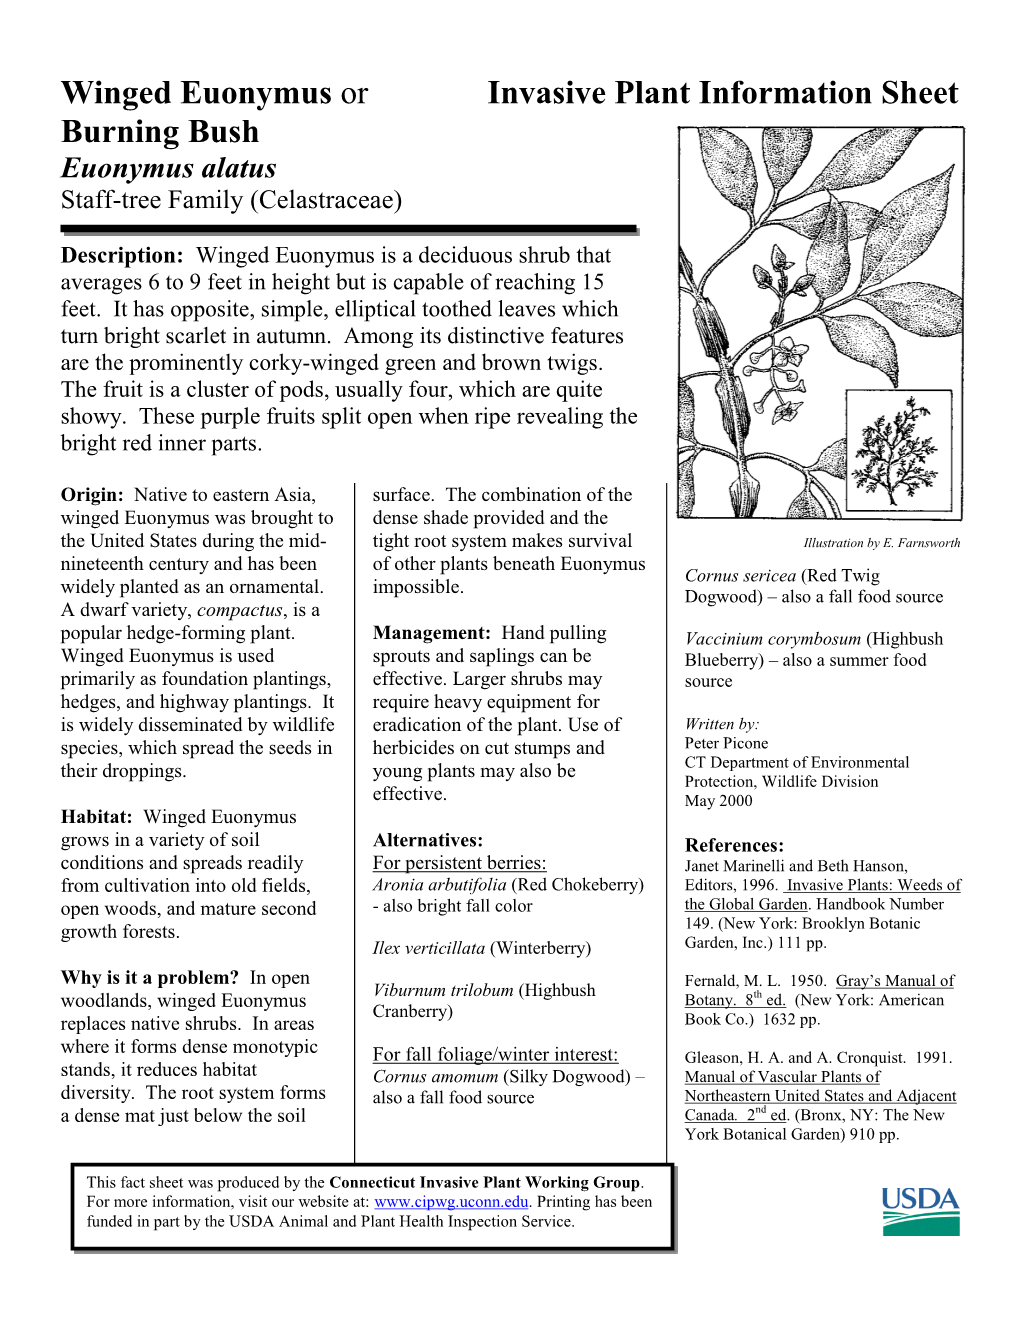 Winged Euonymus Or Invasive Plant Information Sheet Burning Bush Euonymus Alatus Staff-Tree Family (Celastraceae)